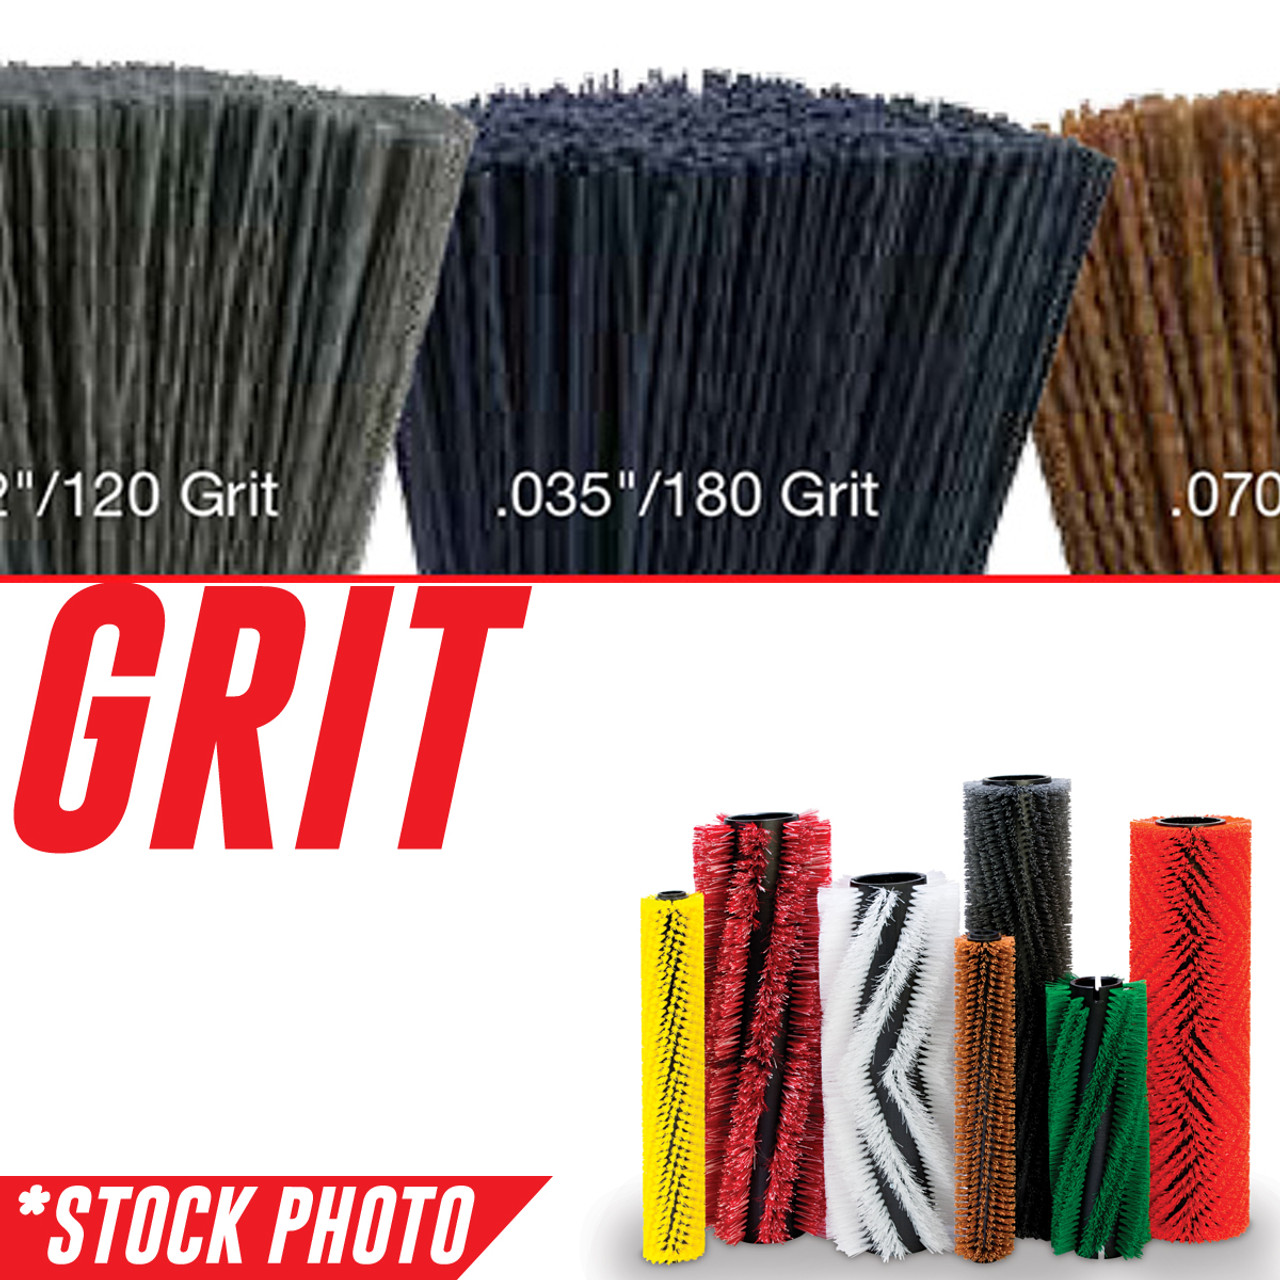 56409944: 42" Cylindrical Brush 16 Single Row .070"/46 Grit fits Advance-Nilfisk Models Retriever 2042